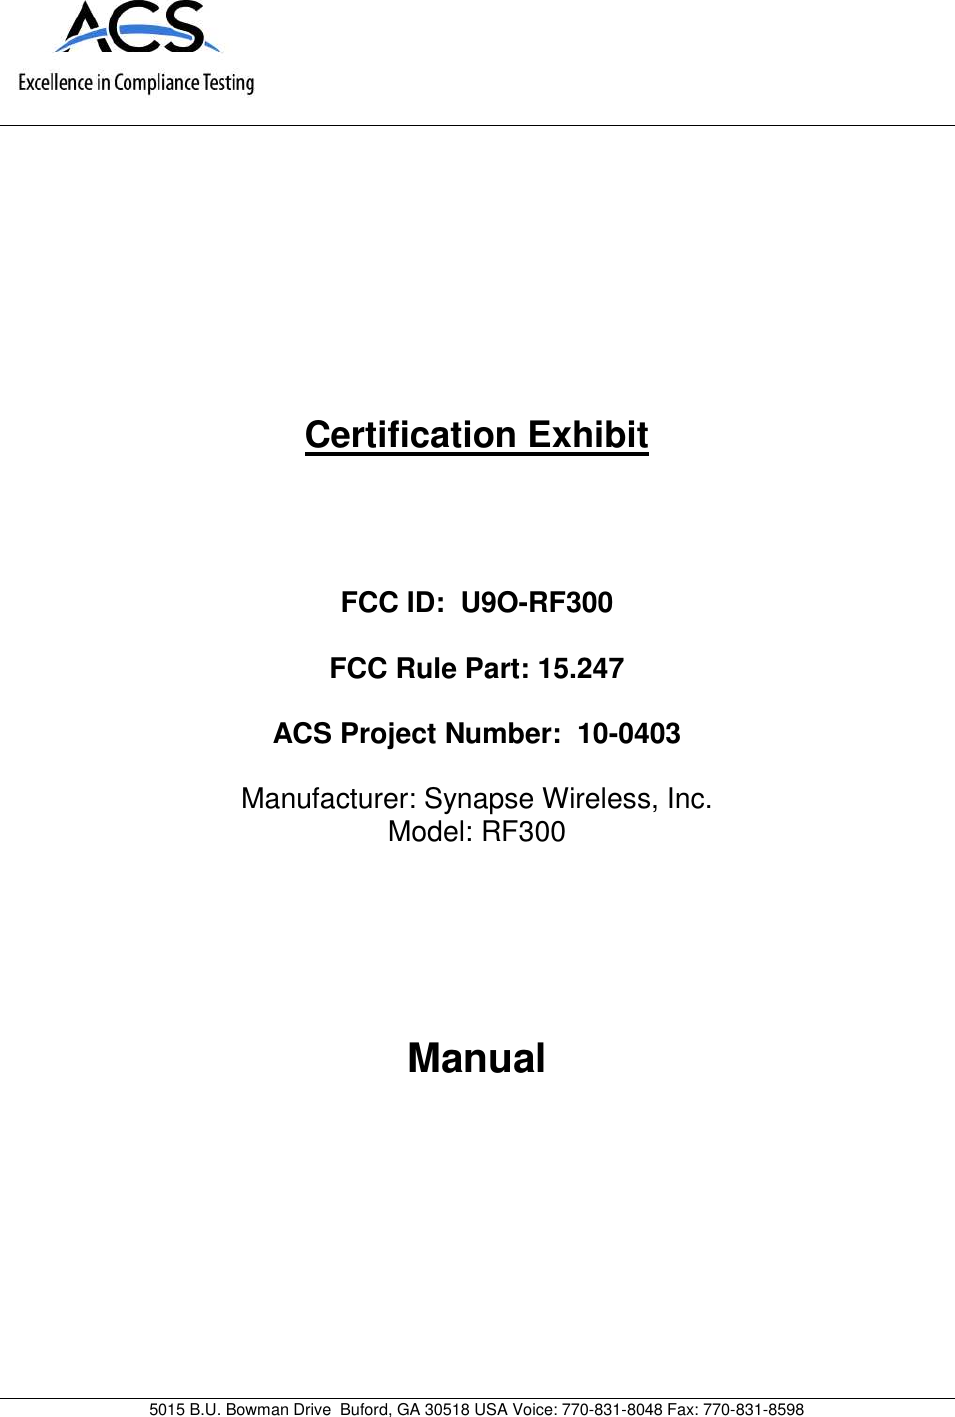 5015 B.U. Bowman Drive Buford, GA 30518 USA Voice: 770-831-8048 Fax: 770-831-8598Certification ExhibitFCC ID: U9O-RF300FCC Rule Part: 15.247ACS Project Number: 10-0403Manufacturer: Synapse Wireless, Inc.Model: RF300Manual